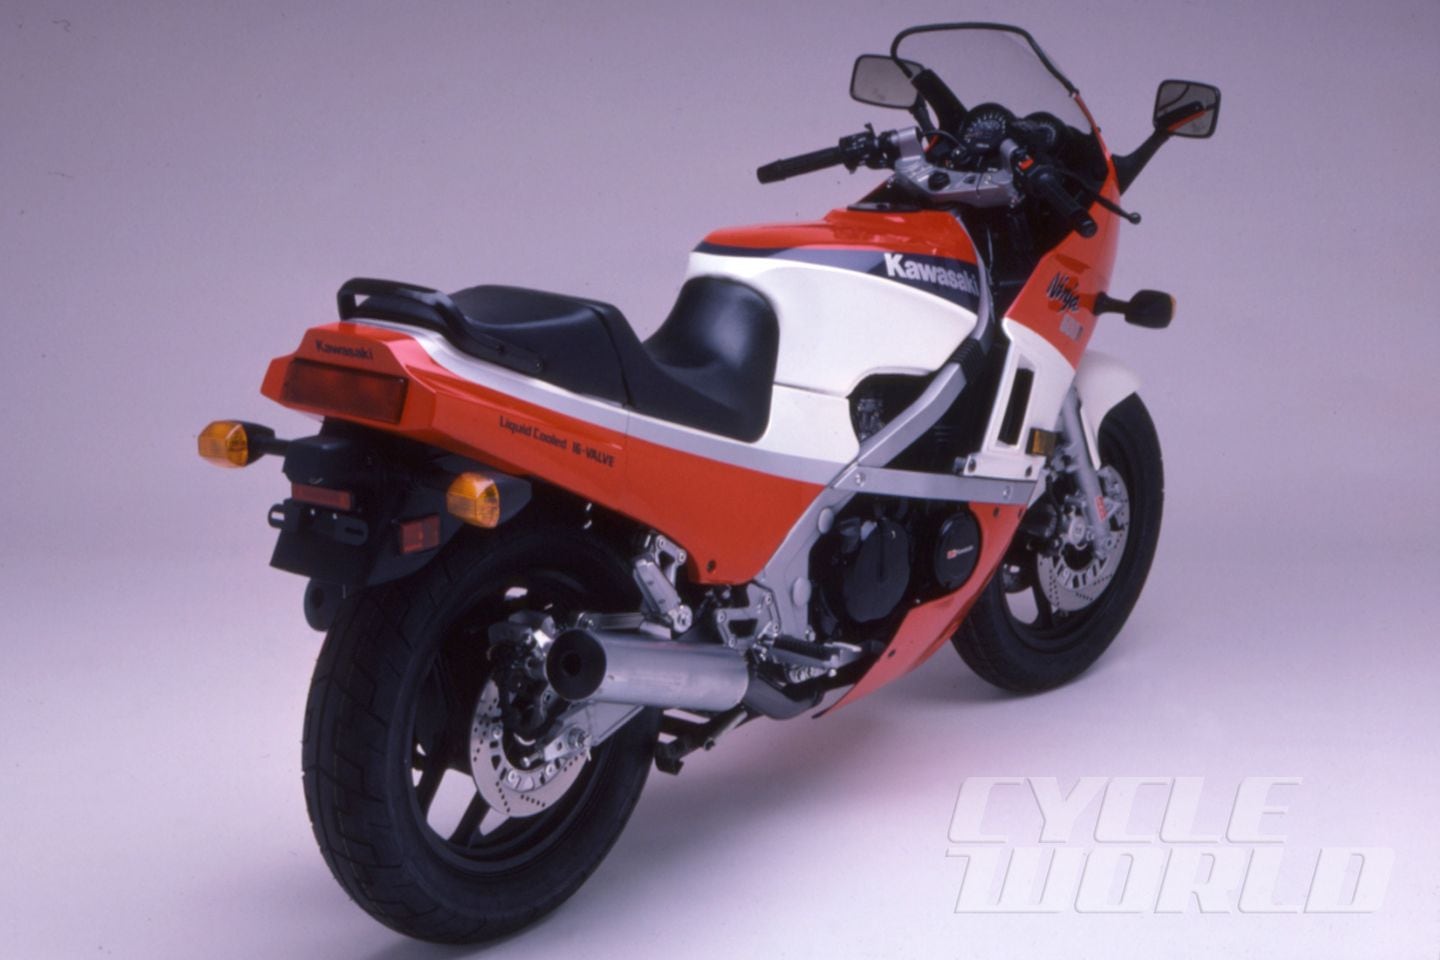 Ninja Motorcycle History: 1984 GPz900 to 1990 ZX-11 | Cycle